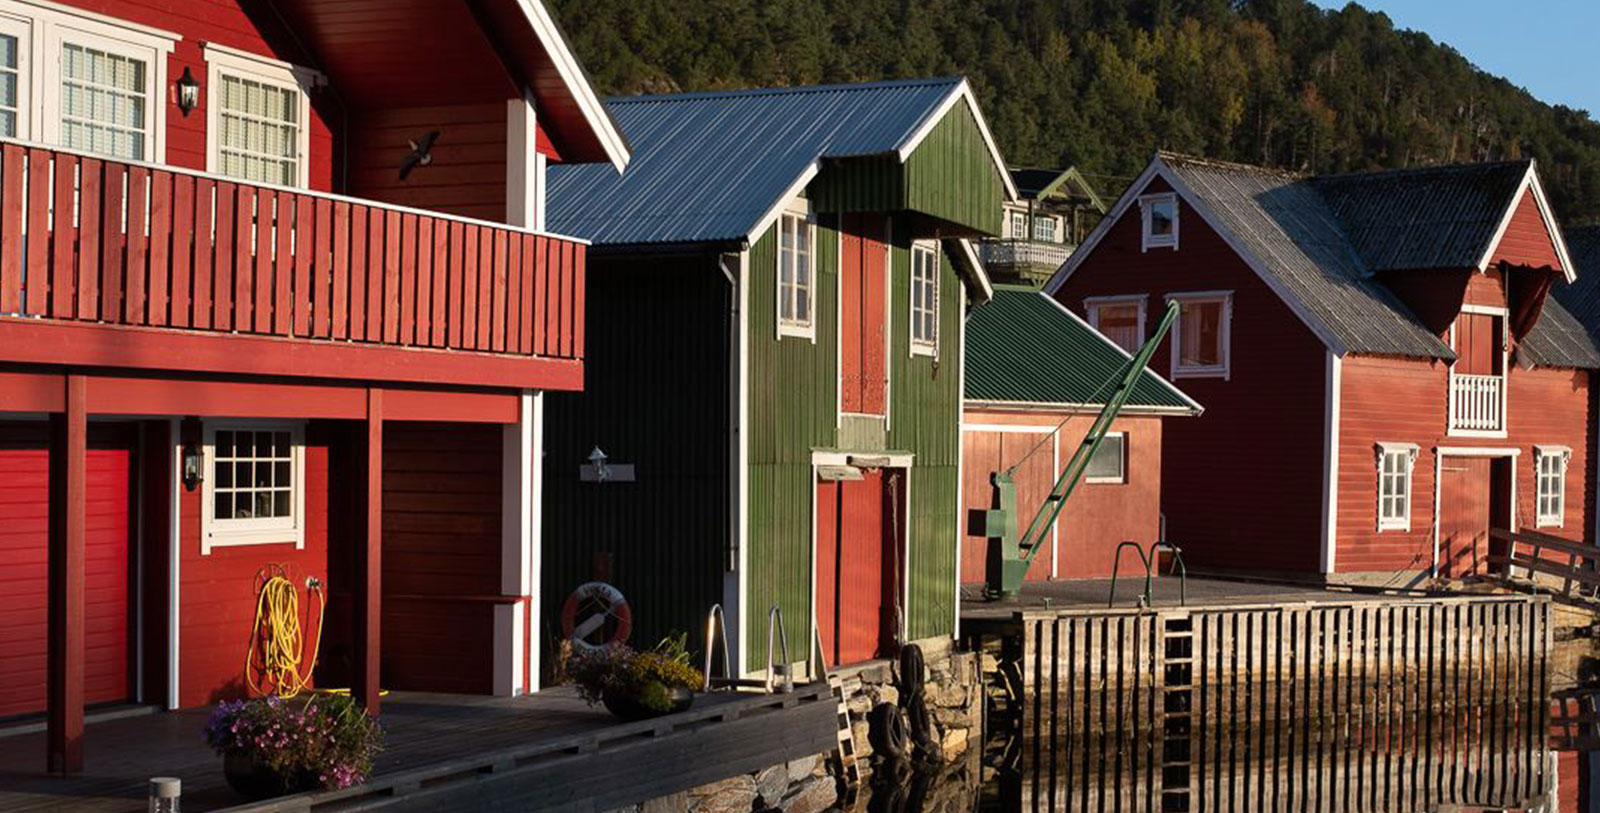 Tour the historic sea cottages of Kalvåg that line Frøya Island.